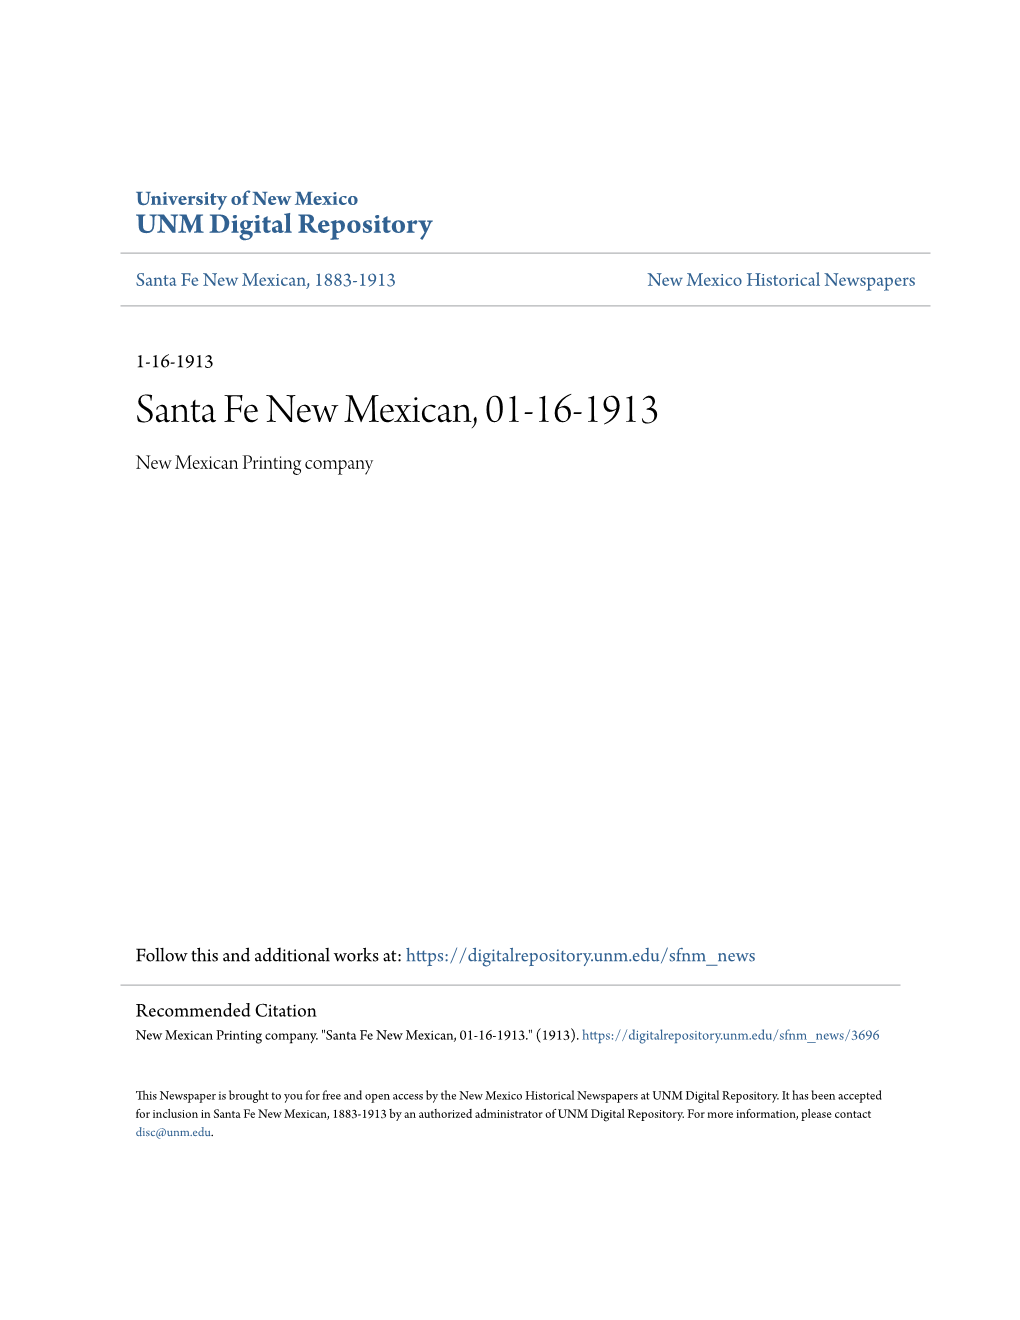 Santa Fe New Mexican, 01-16-1913 New Mexican Printing Company